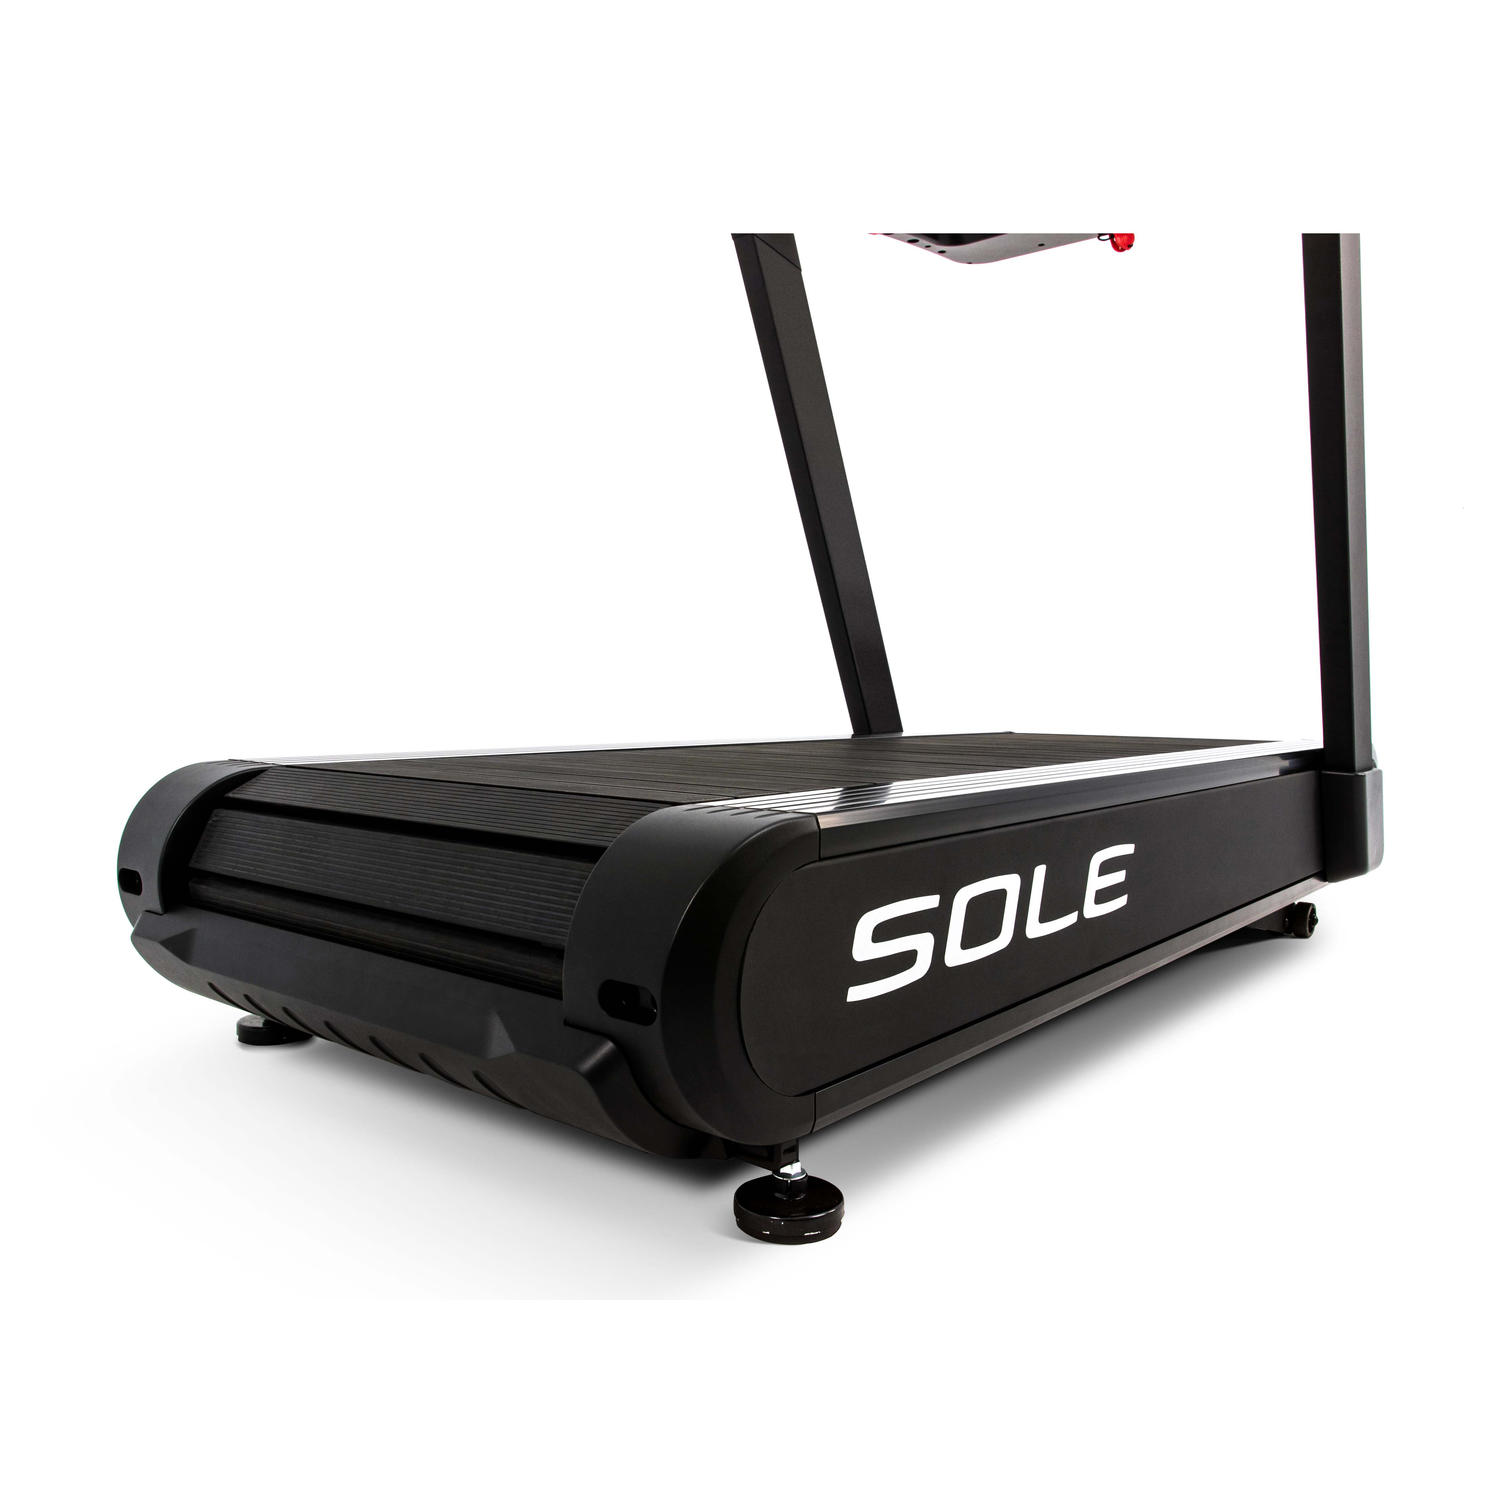 SOLE ST90 Treadmill Rear Angle Close